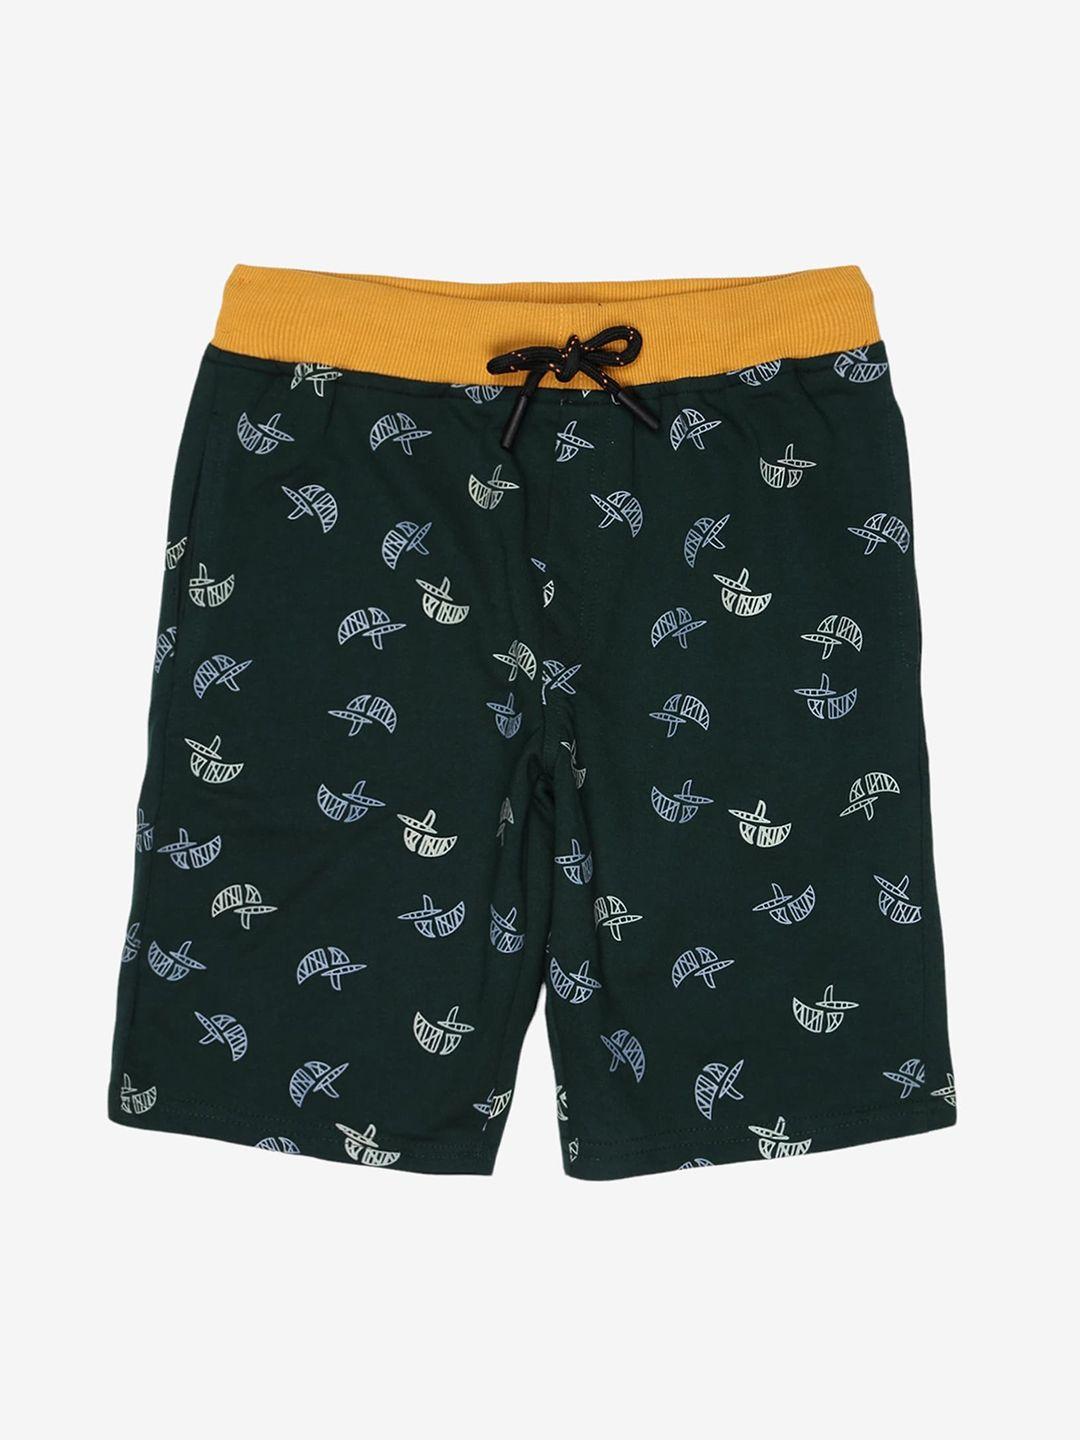 alan jones boys navy blue conversational printed outdoor shorts